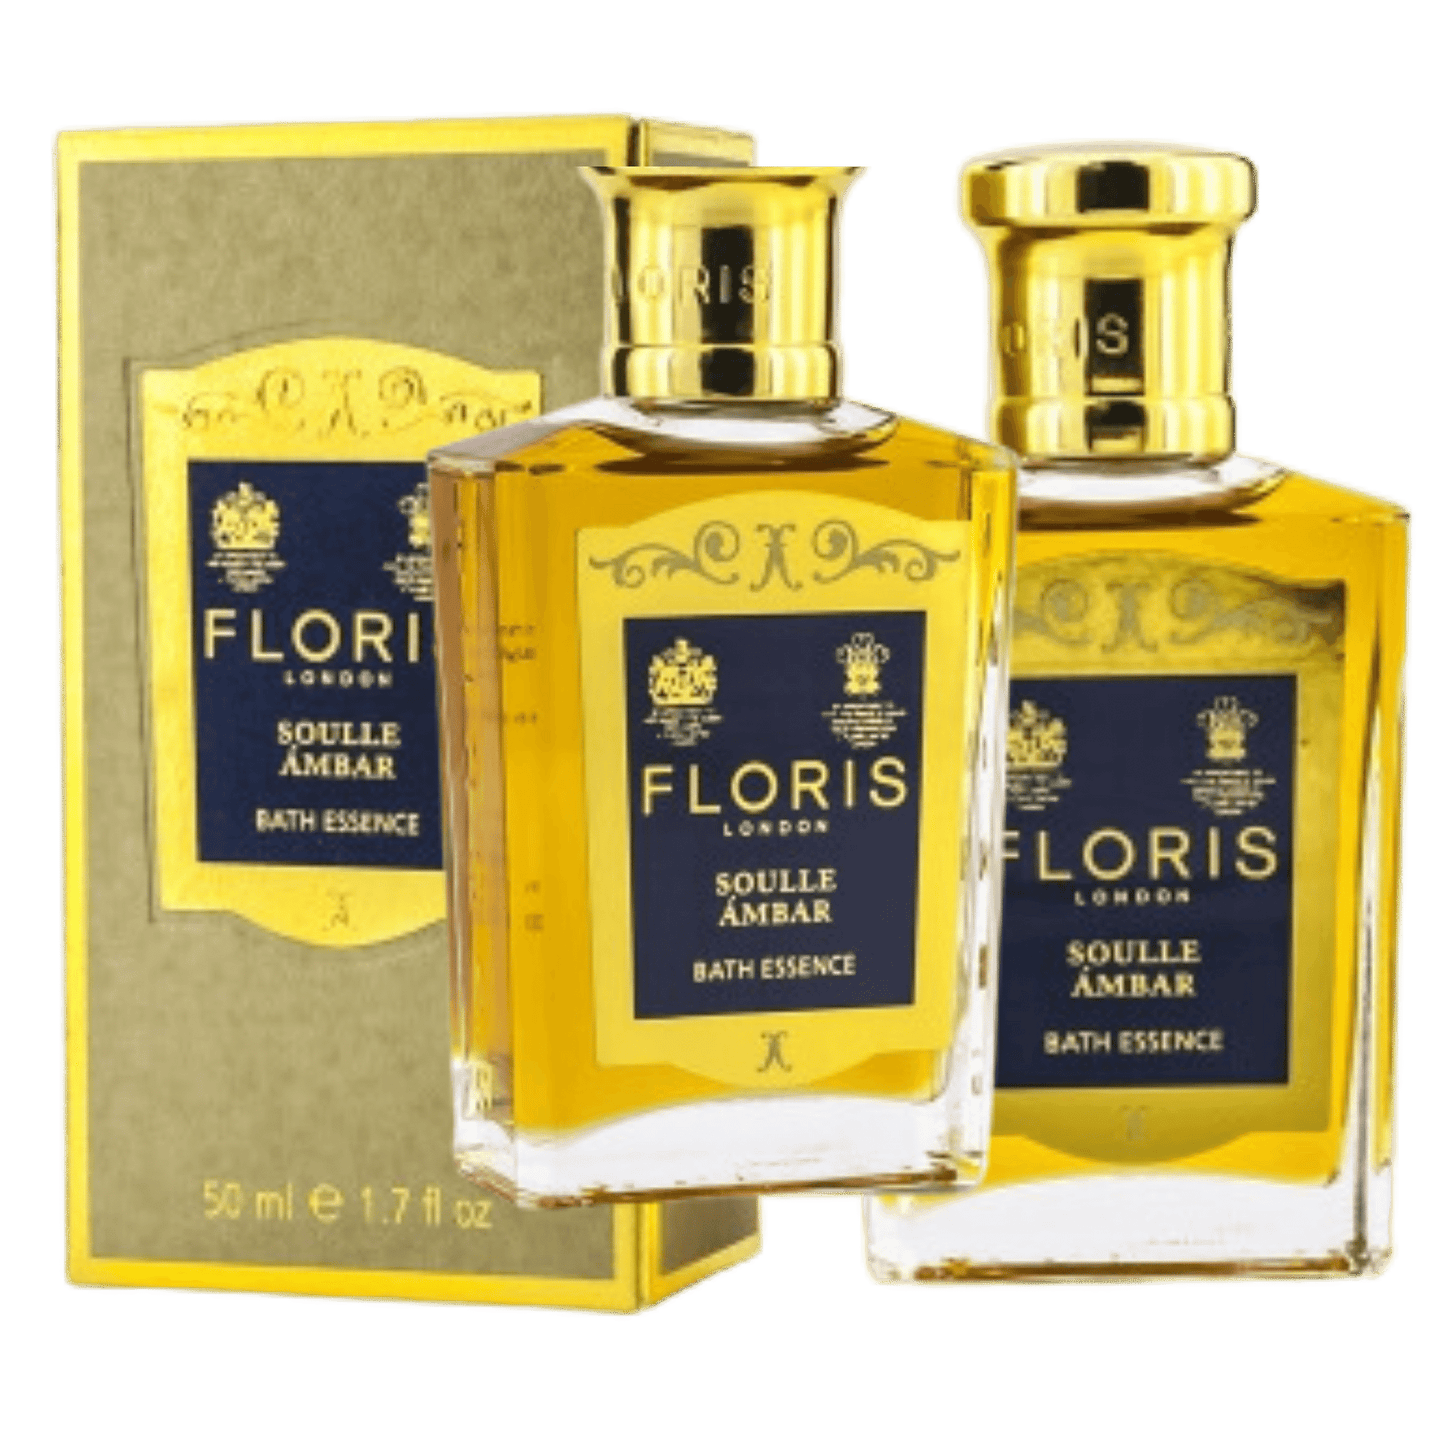 Floris Soulle Ambar Bath Essence (50ml)